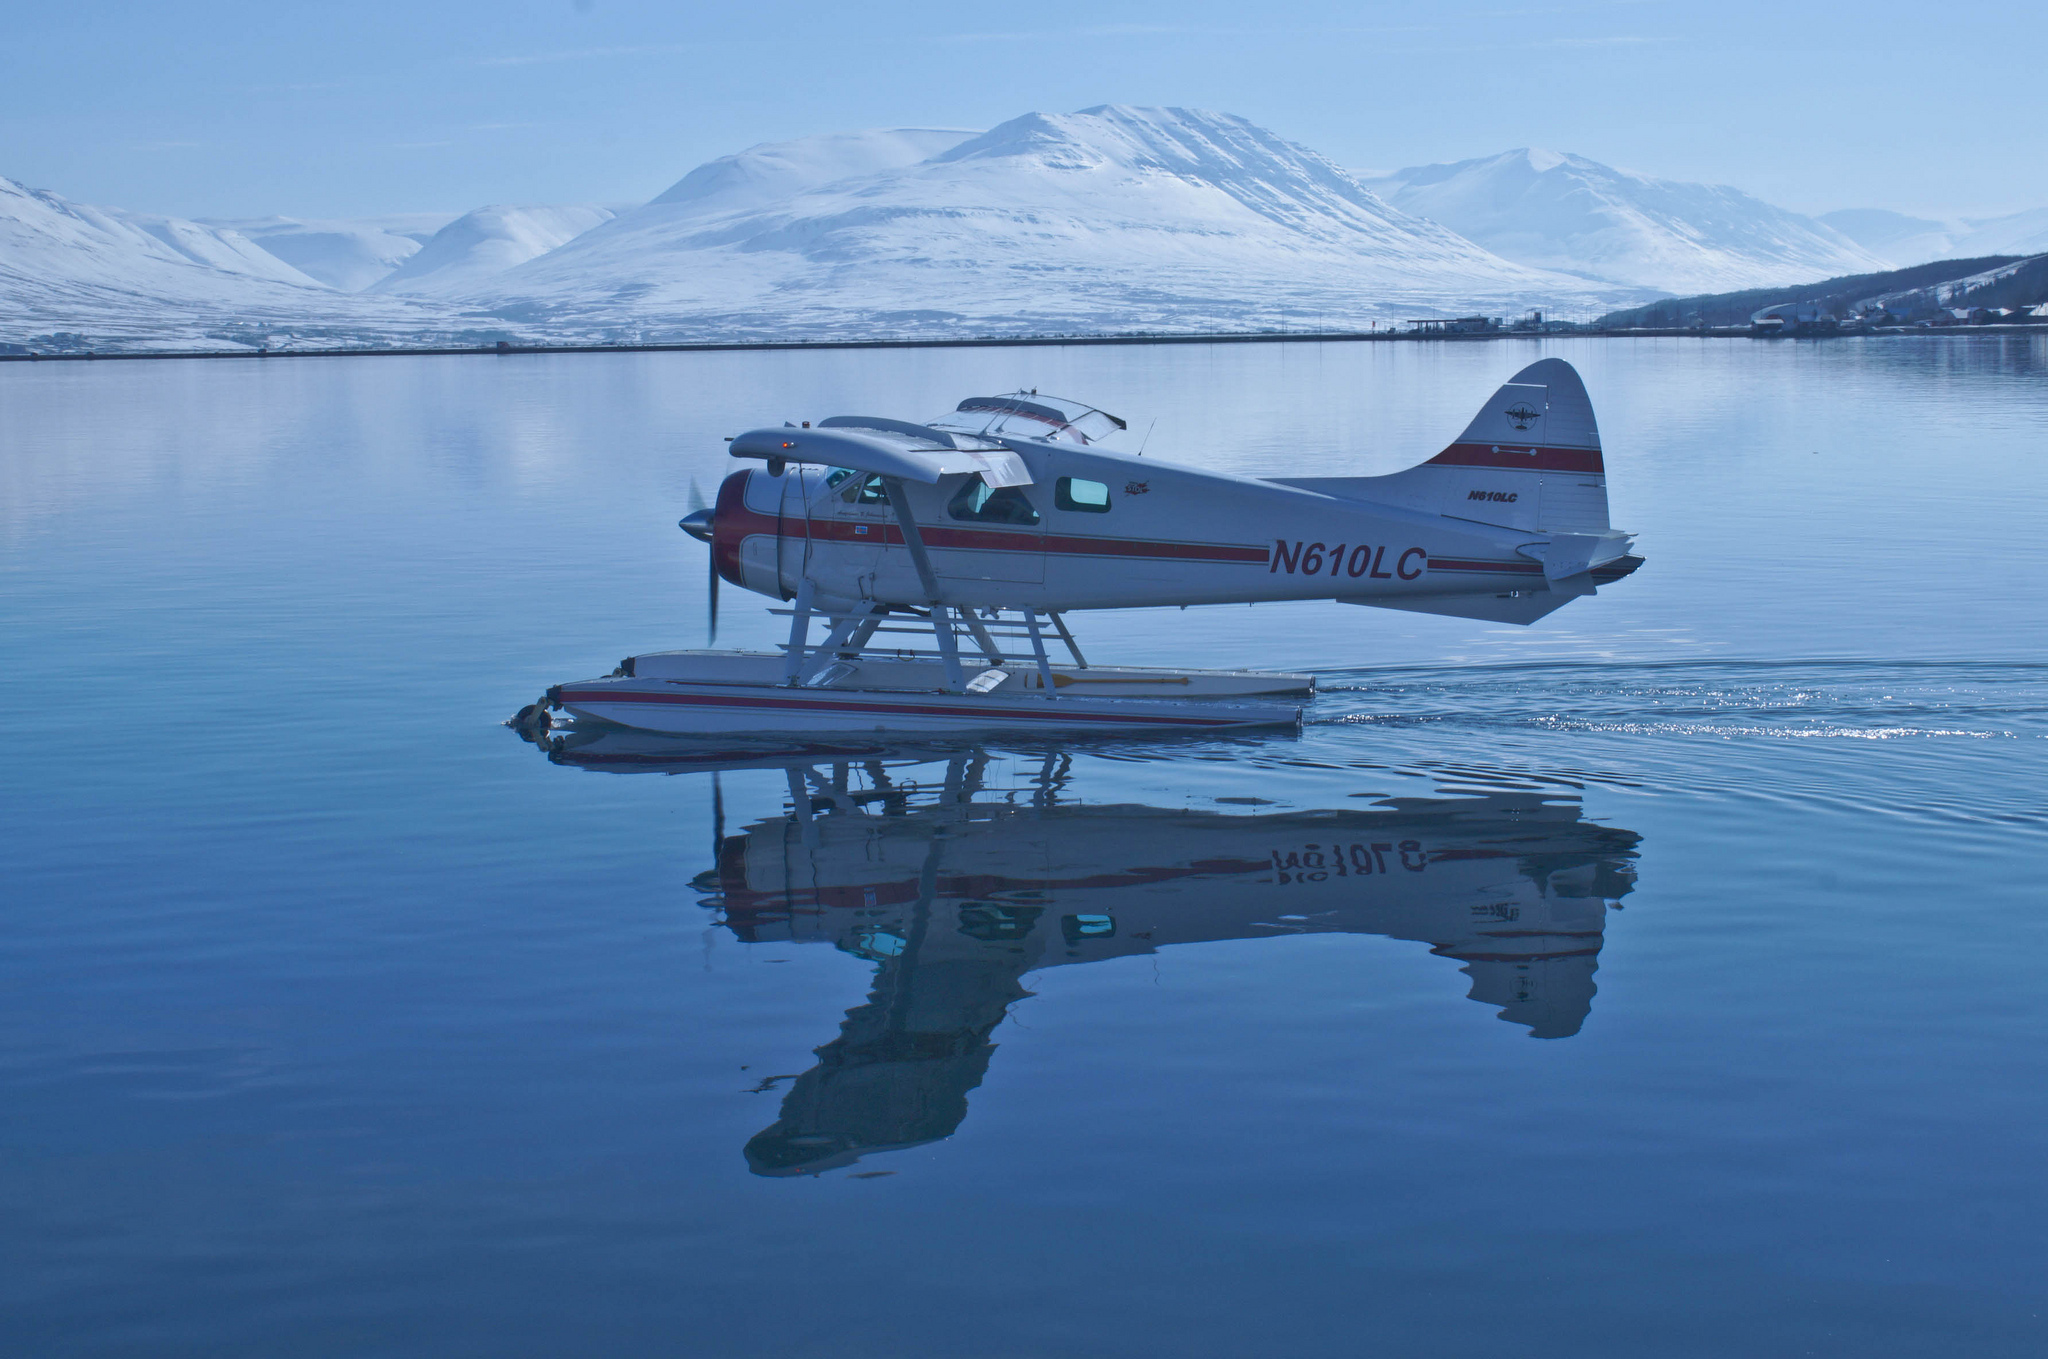 Free HD sweden, dhc 2 beaver, vehicles, aircraft, airplane, de havilland, mountain, reflection, seaplane, snow, water, winter